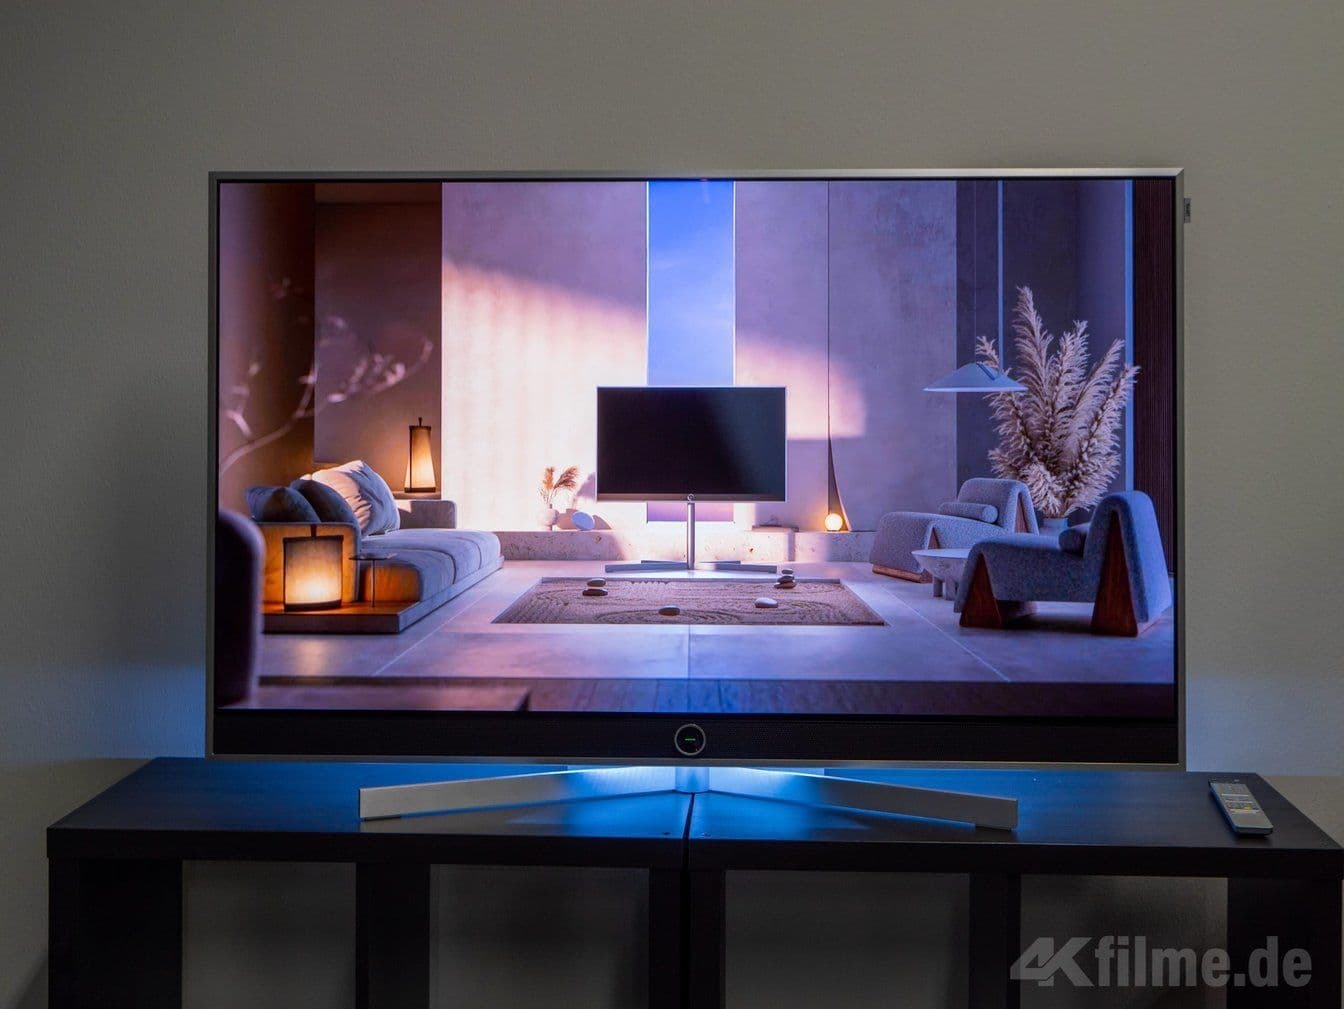 Samsung brings Tizen OS to Loewe's luxury OLED TVs